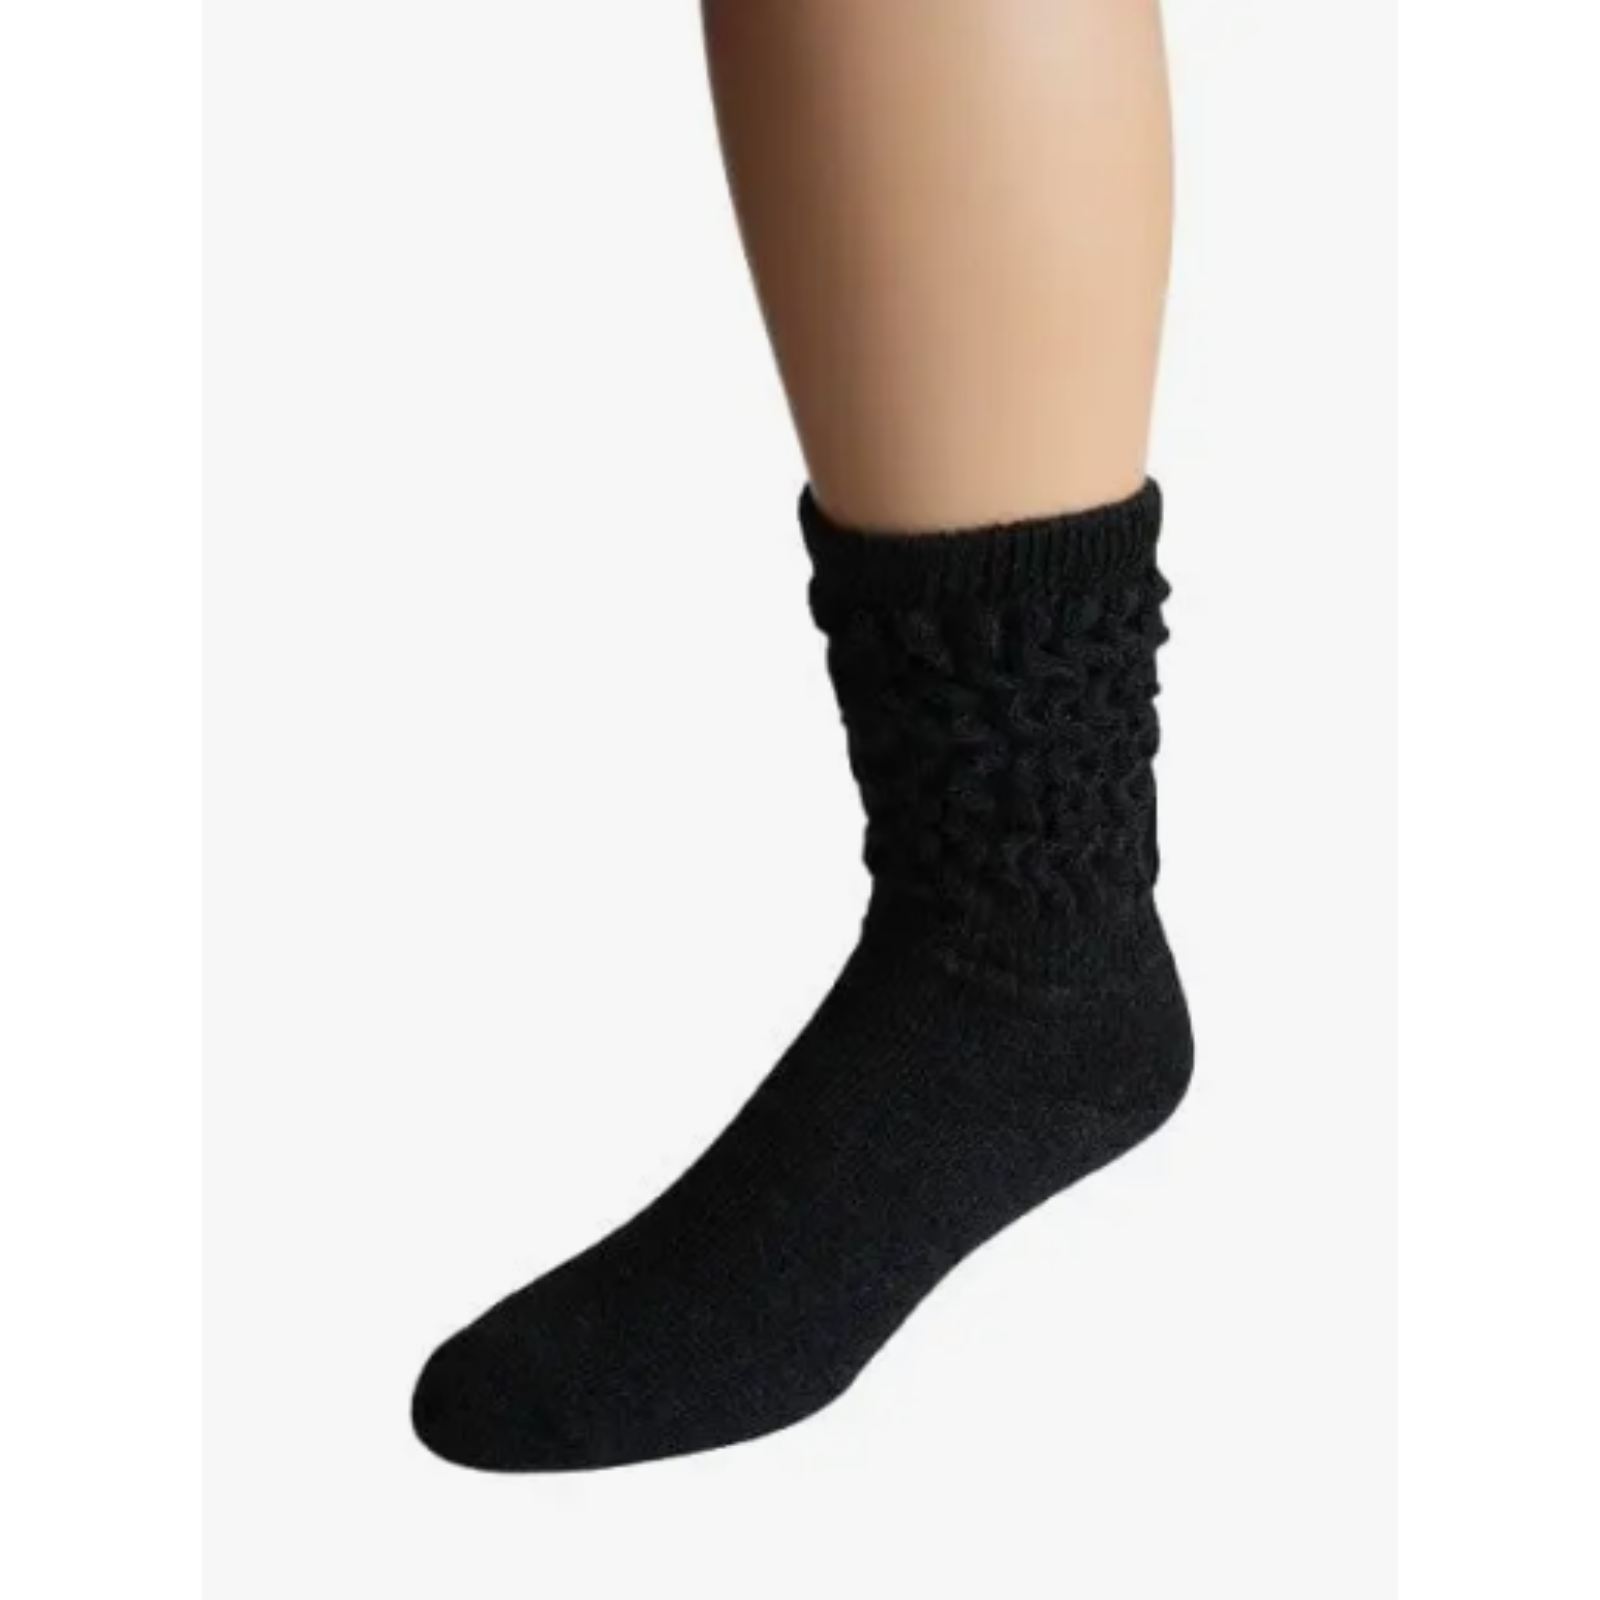 Busy Socks Womens Novelty Patterned Cushion Comfort Sport Hiking Crew Socks  Size 9-11, Rib Working Boots Socks, Medium, 2 Pairs Black + 2 Pairs Dark  Grey at  Men's Clothing store